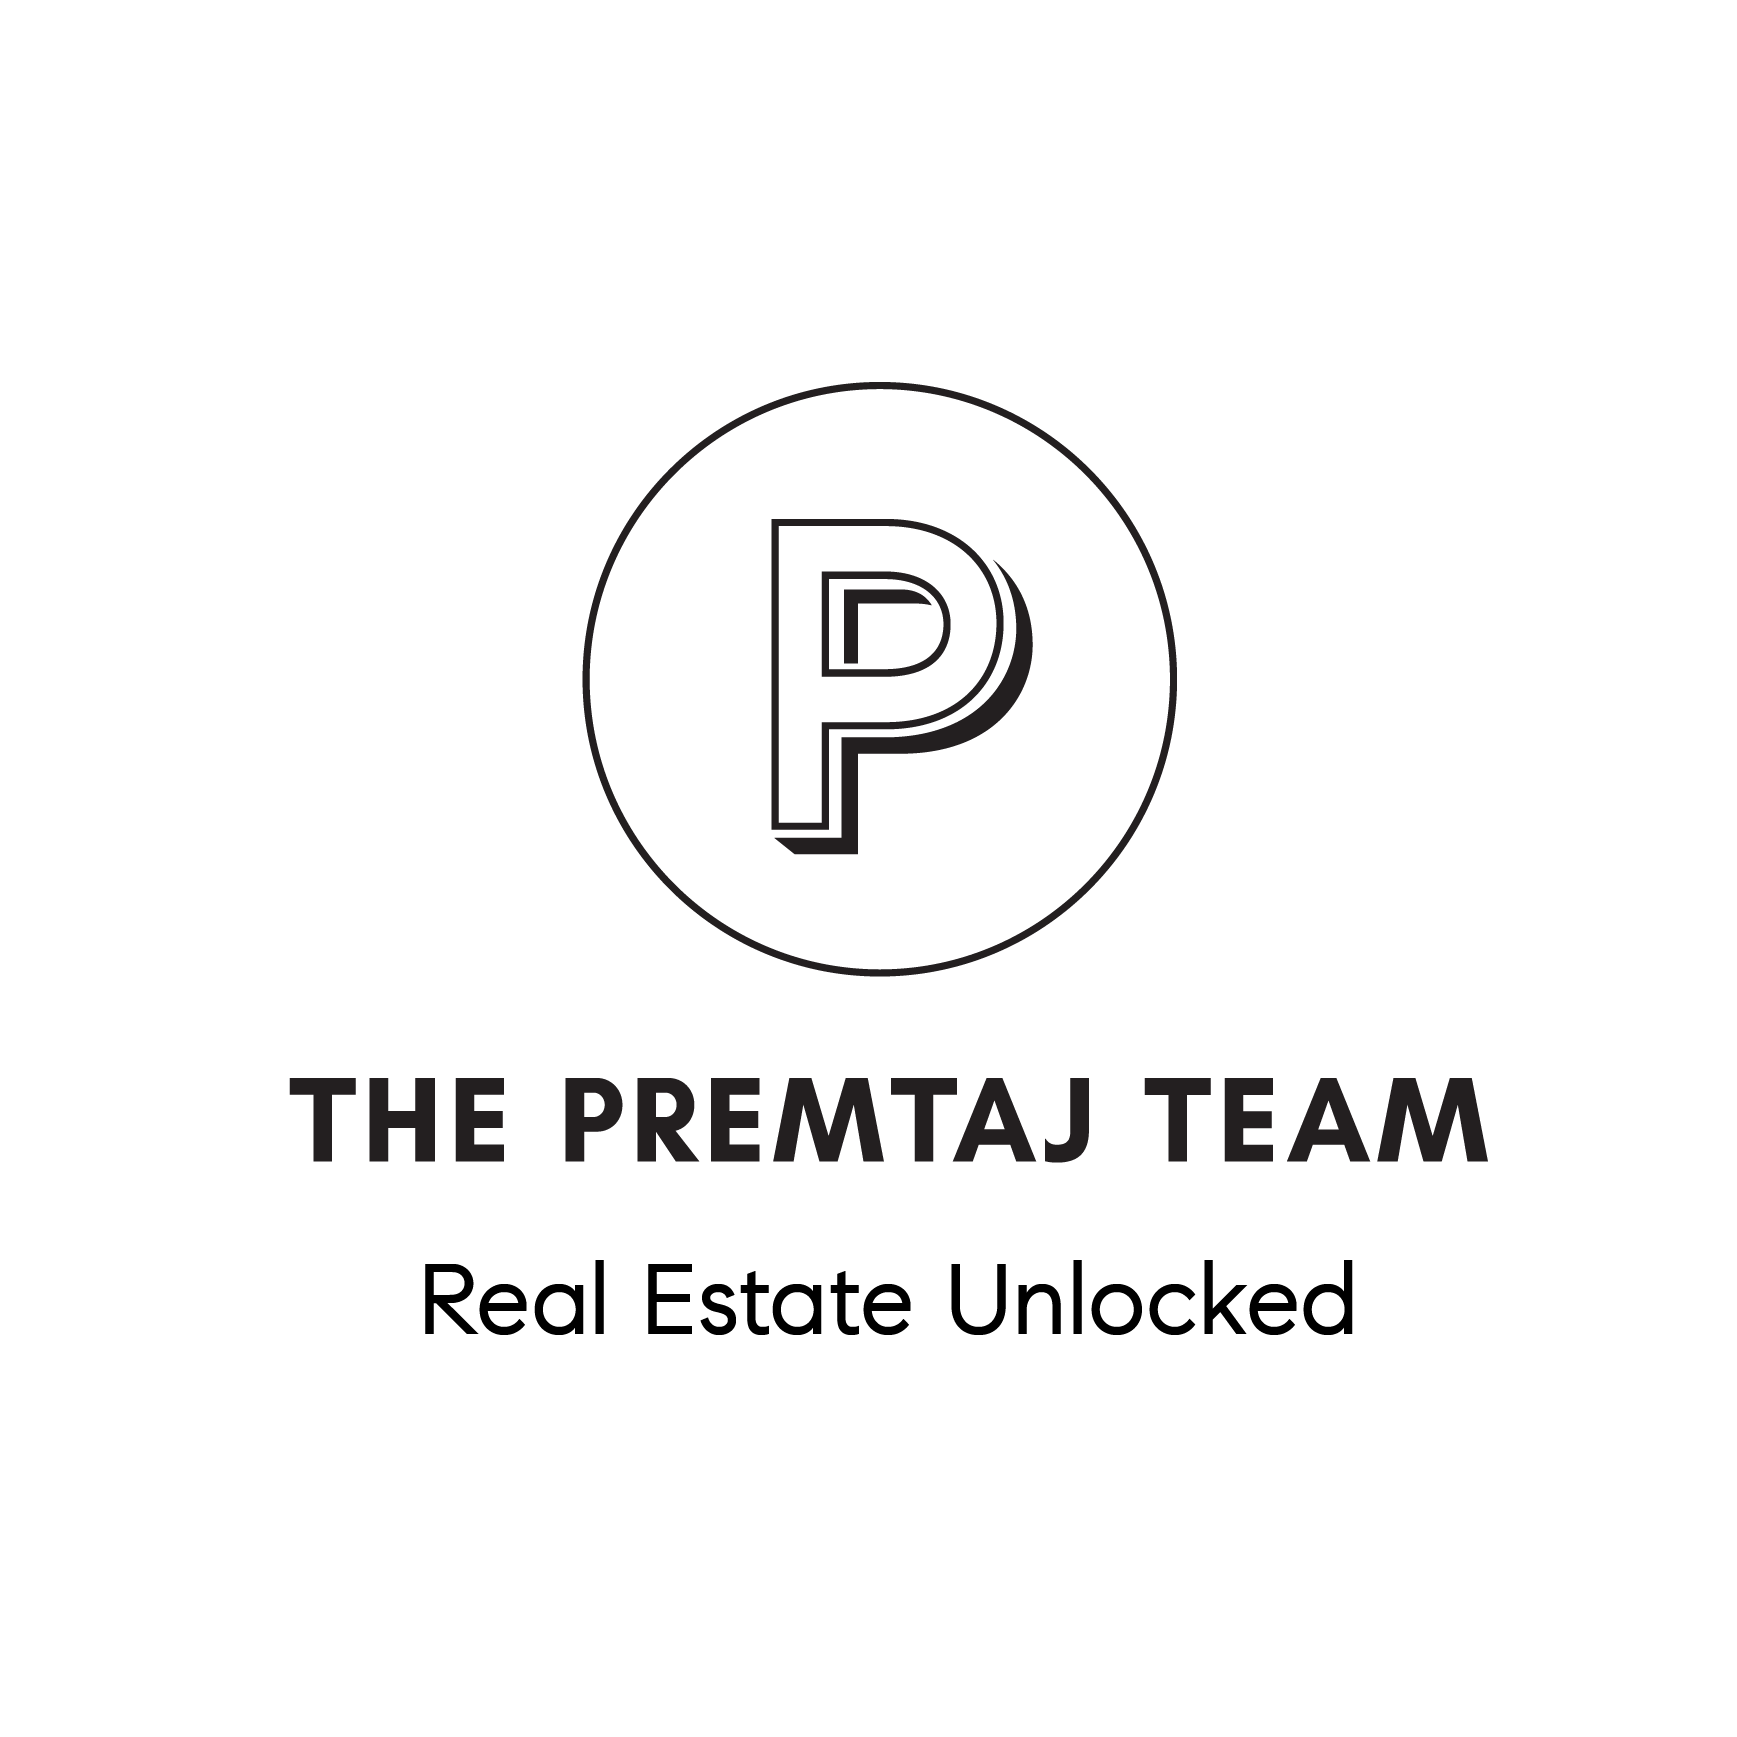 The Premtaj Team